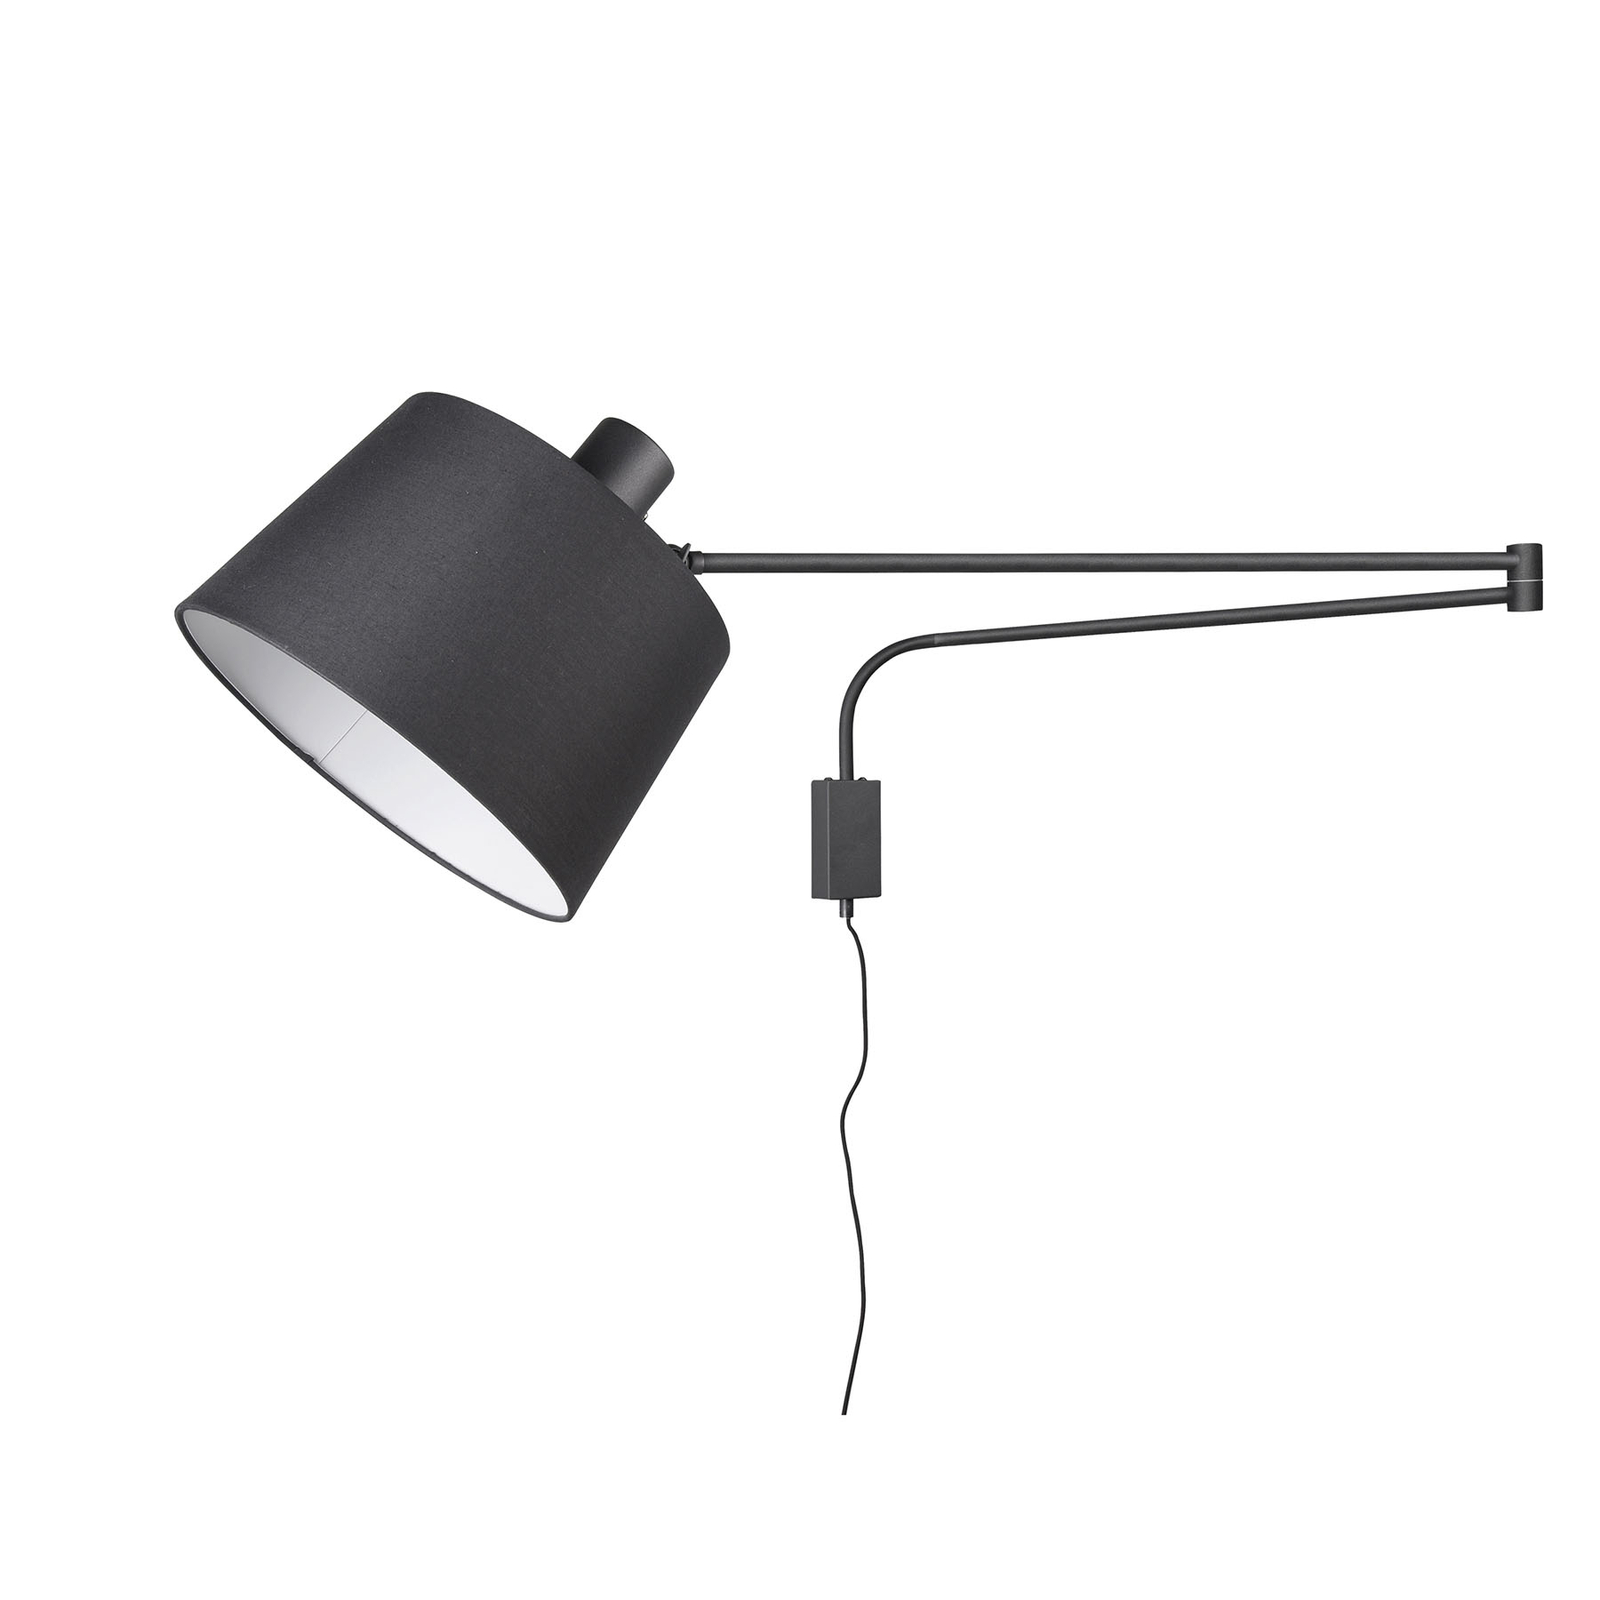 Vägglampa Baldo med kabel + kontakt, svart